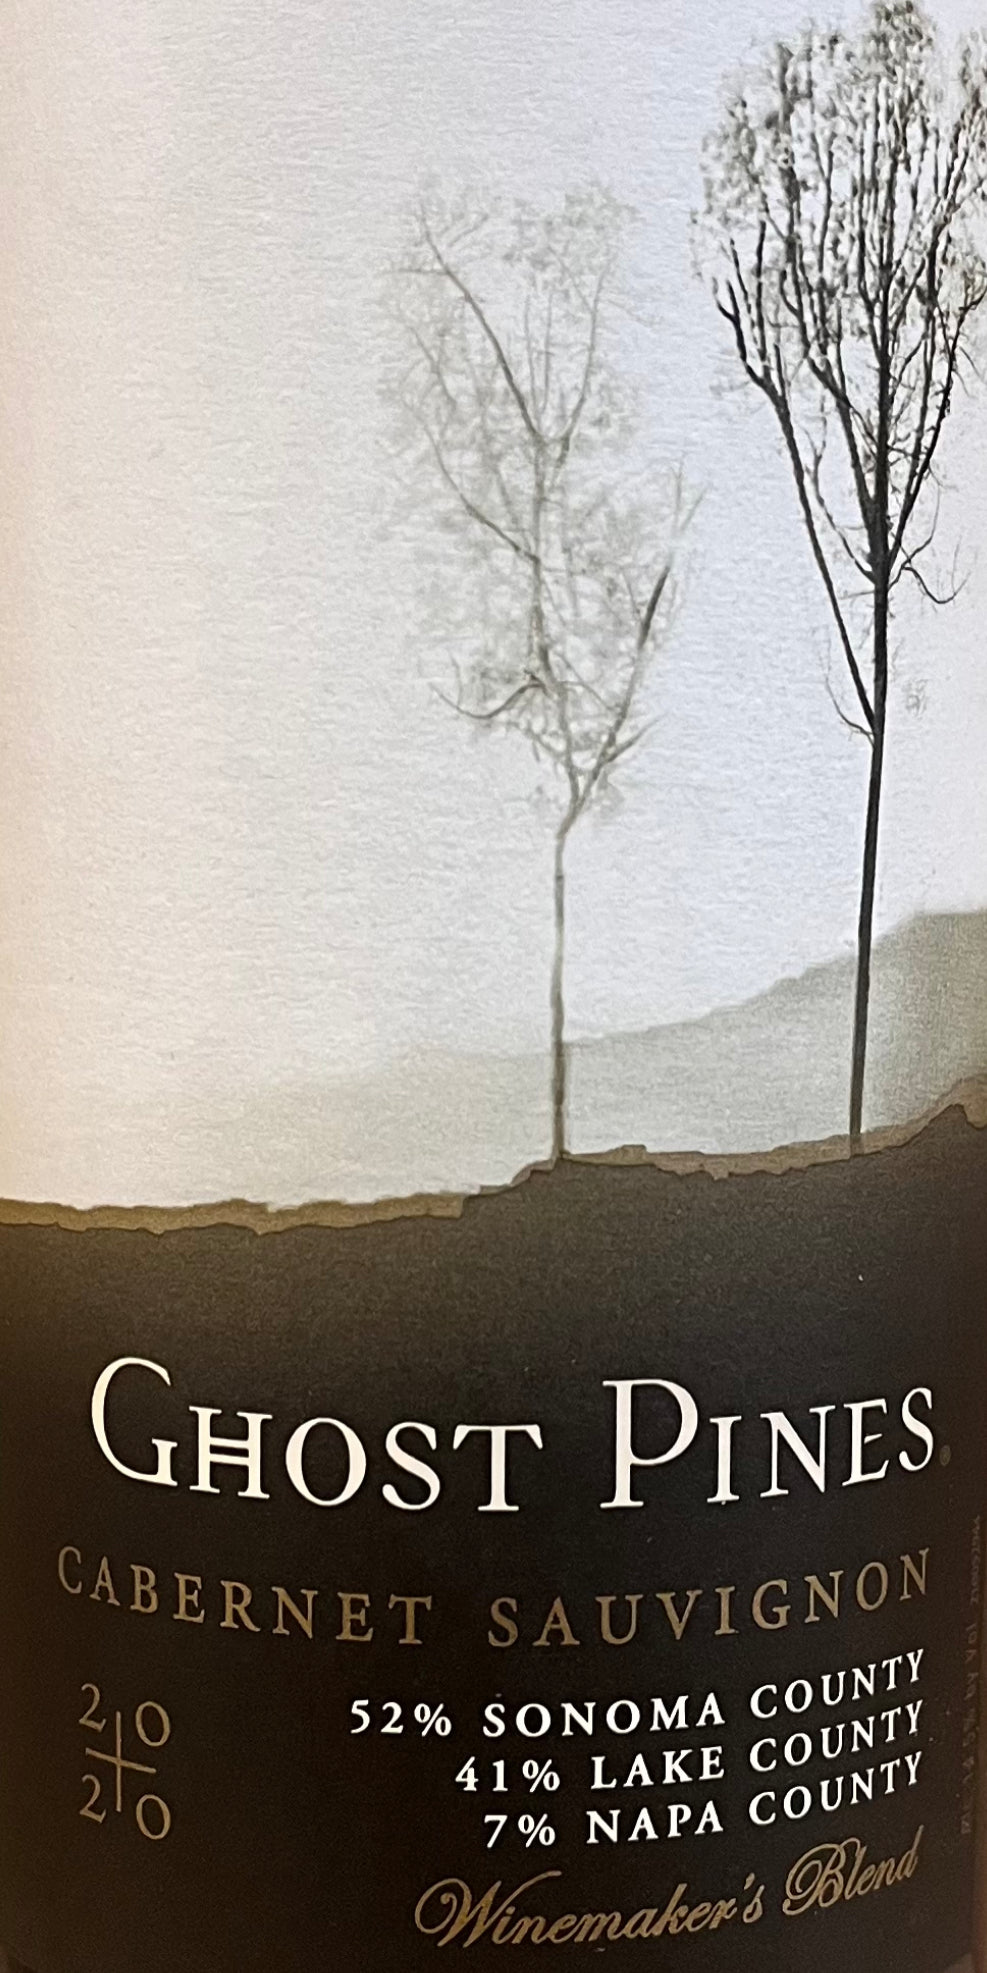 Ghost Pines Cabernet Sauvignon